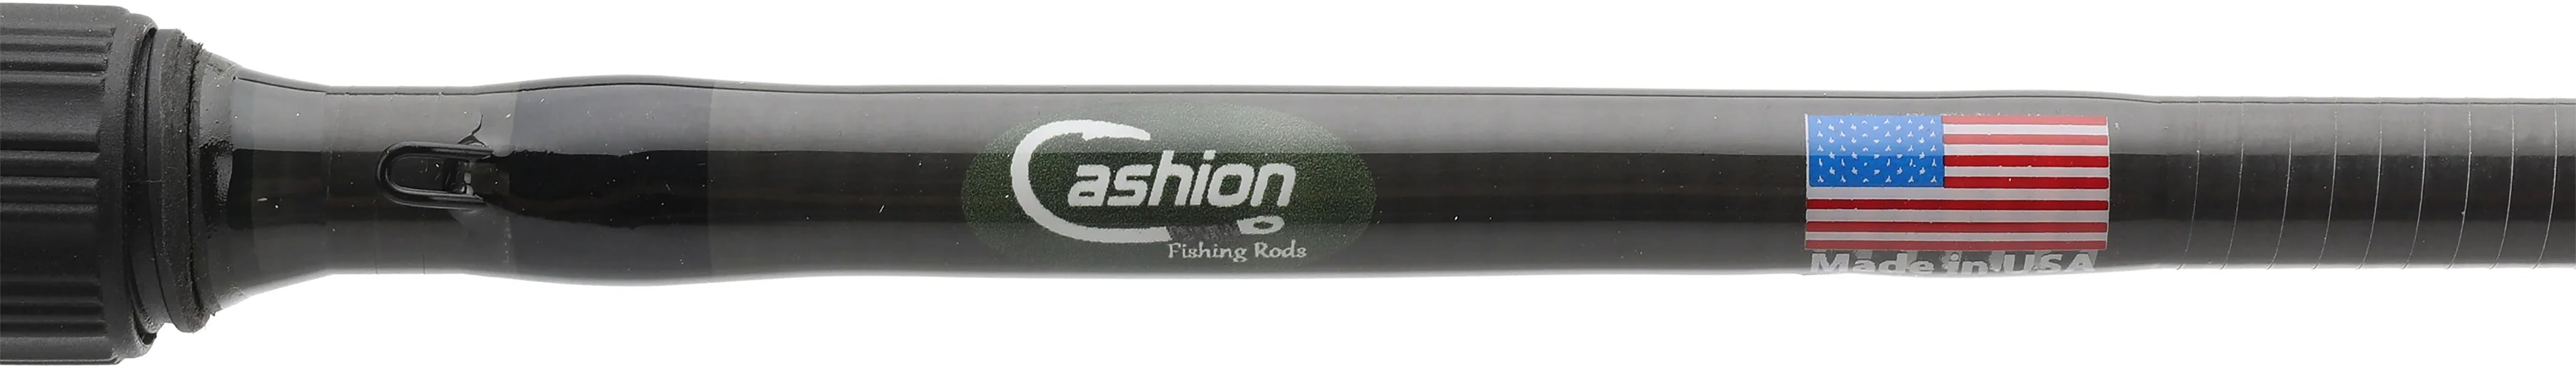 Cashion ICON Series Crankbait Casting Rods